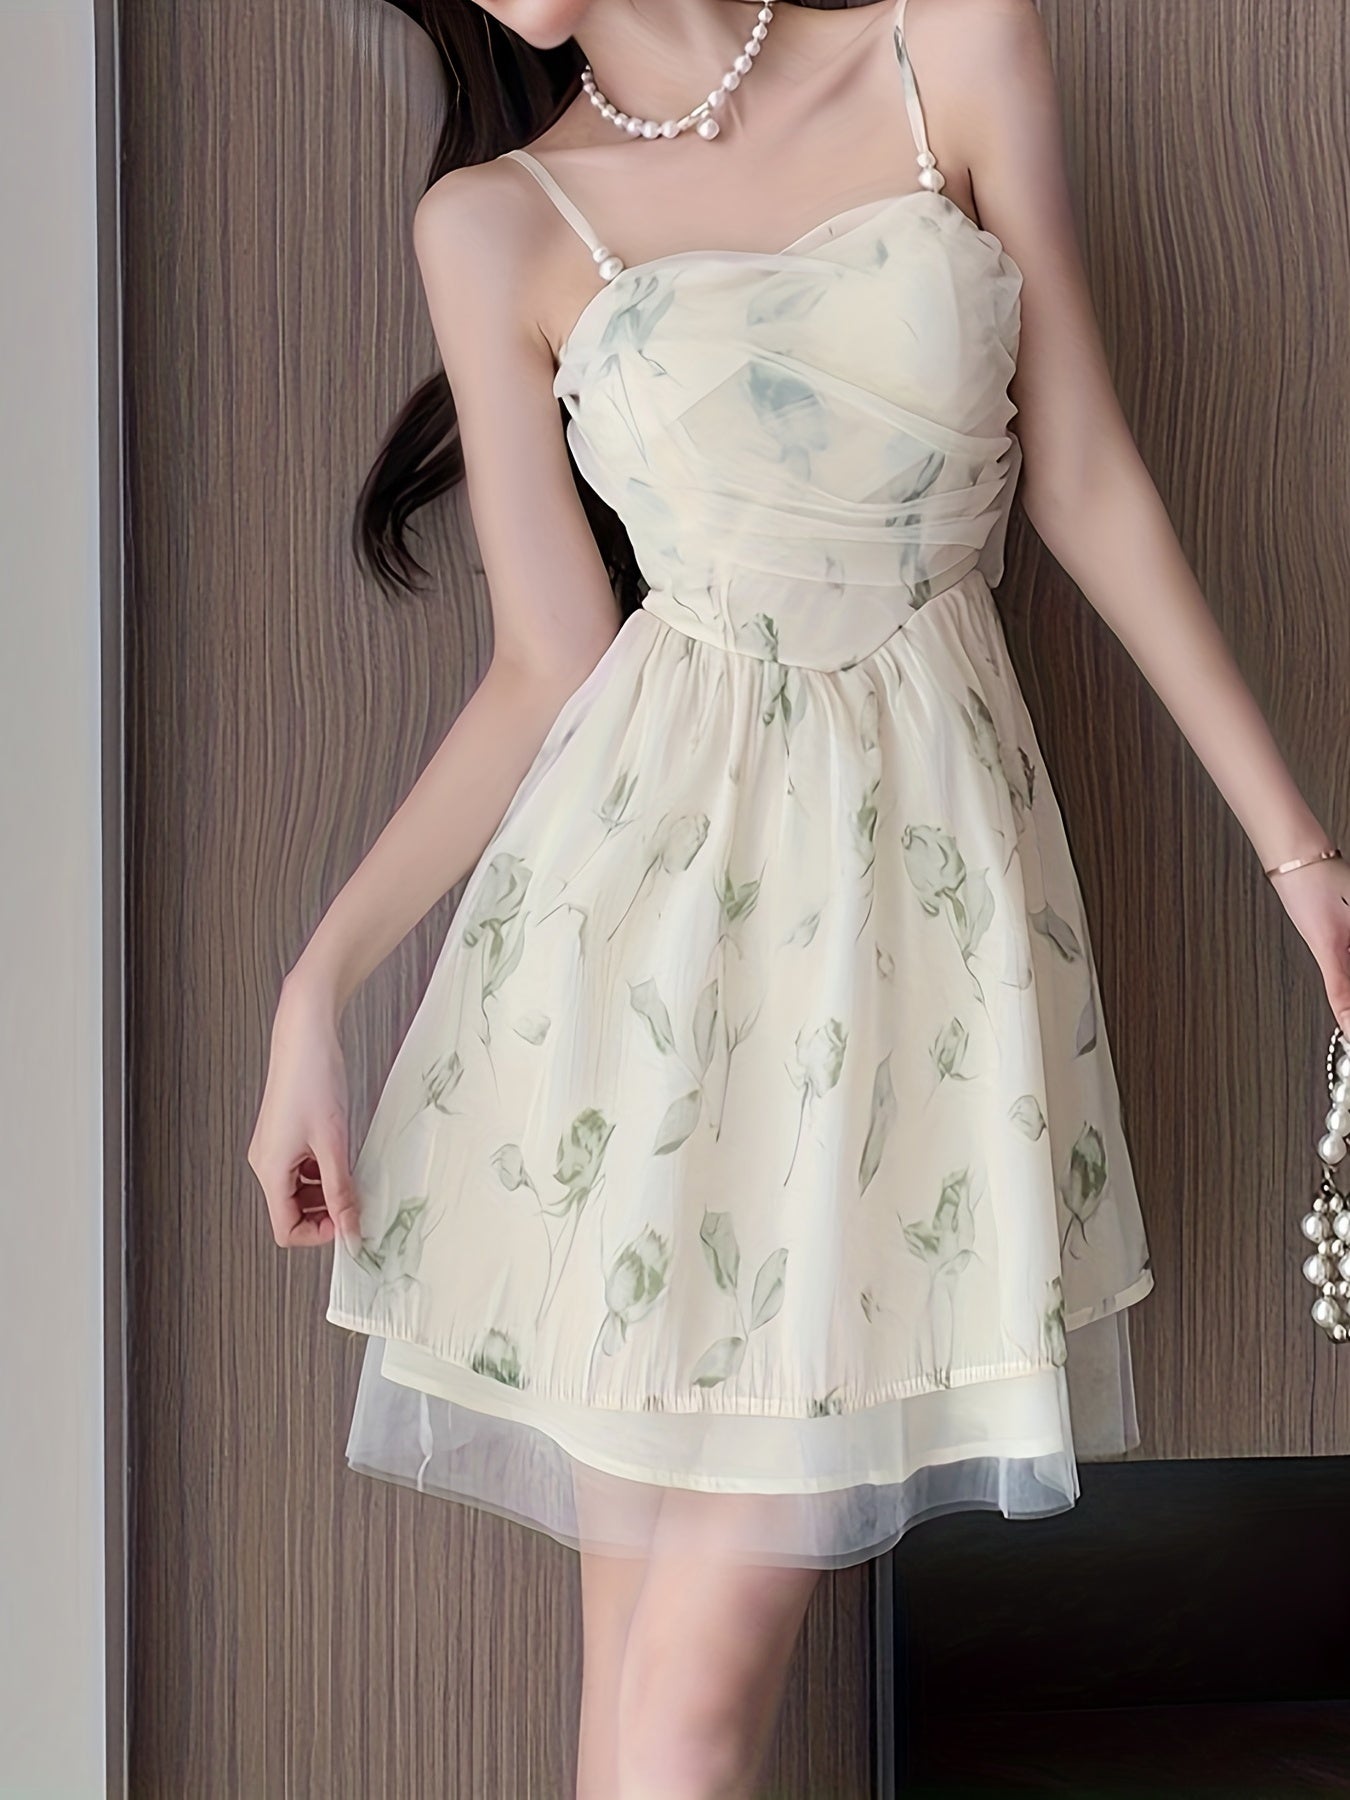 vzyzv  Floral Print Contrast Mesh Dress, Elegant Spaghetti Knot Sleeveless Dress, Women's Clothing